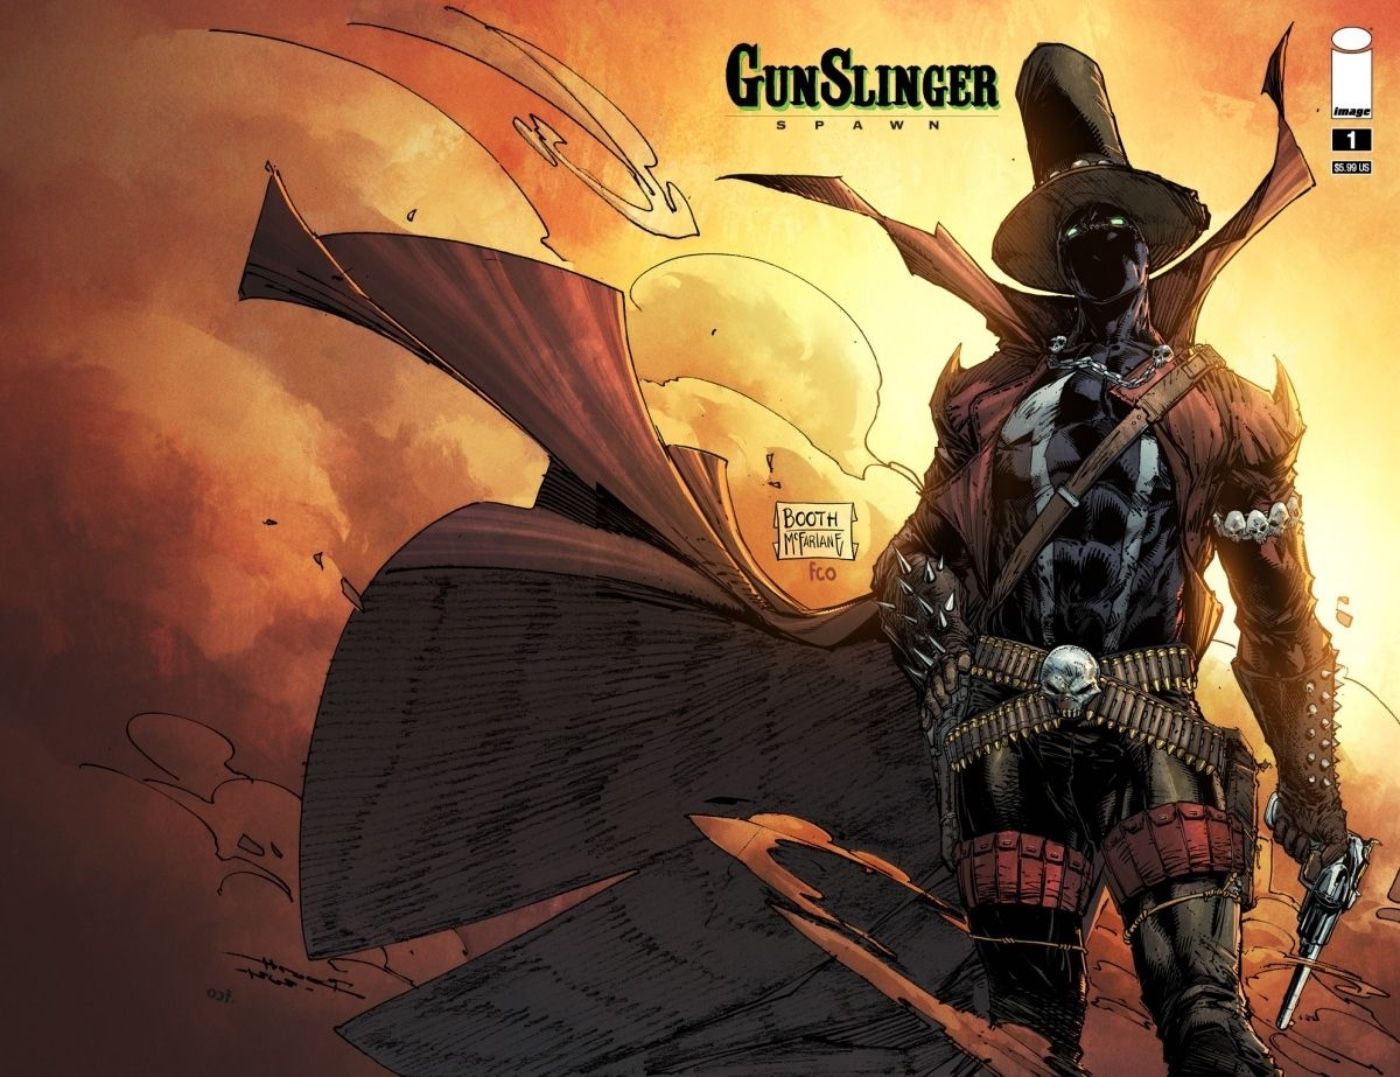 Gunslinger Spawn Set to Be Image Comics Biggest Debut in 30 Years